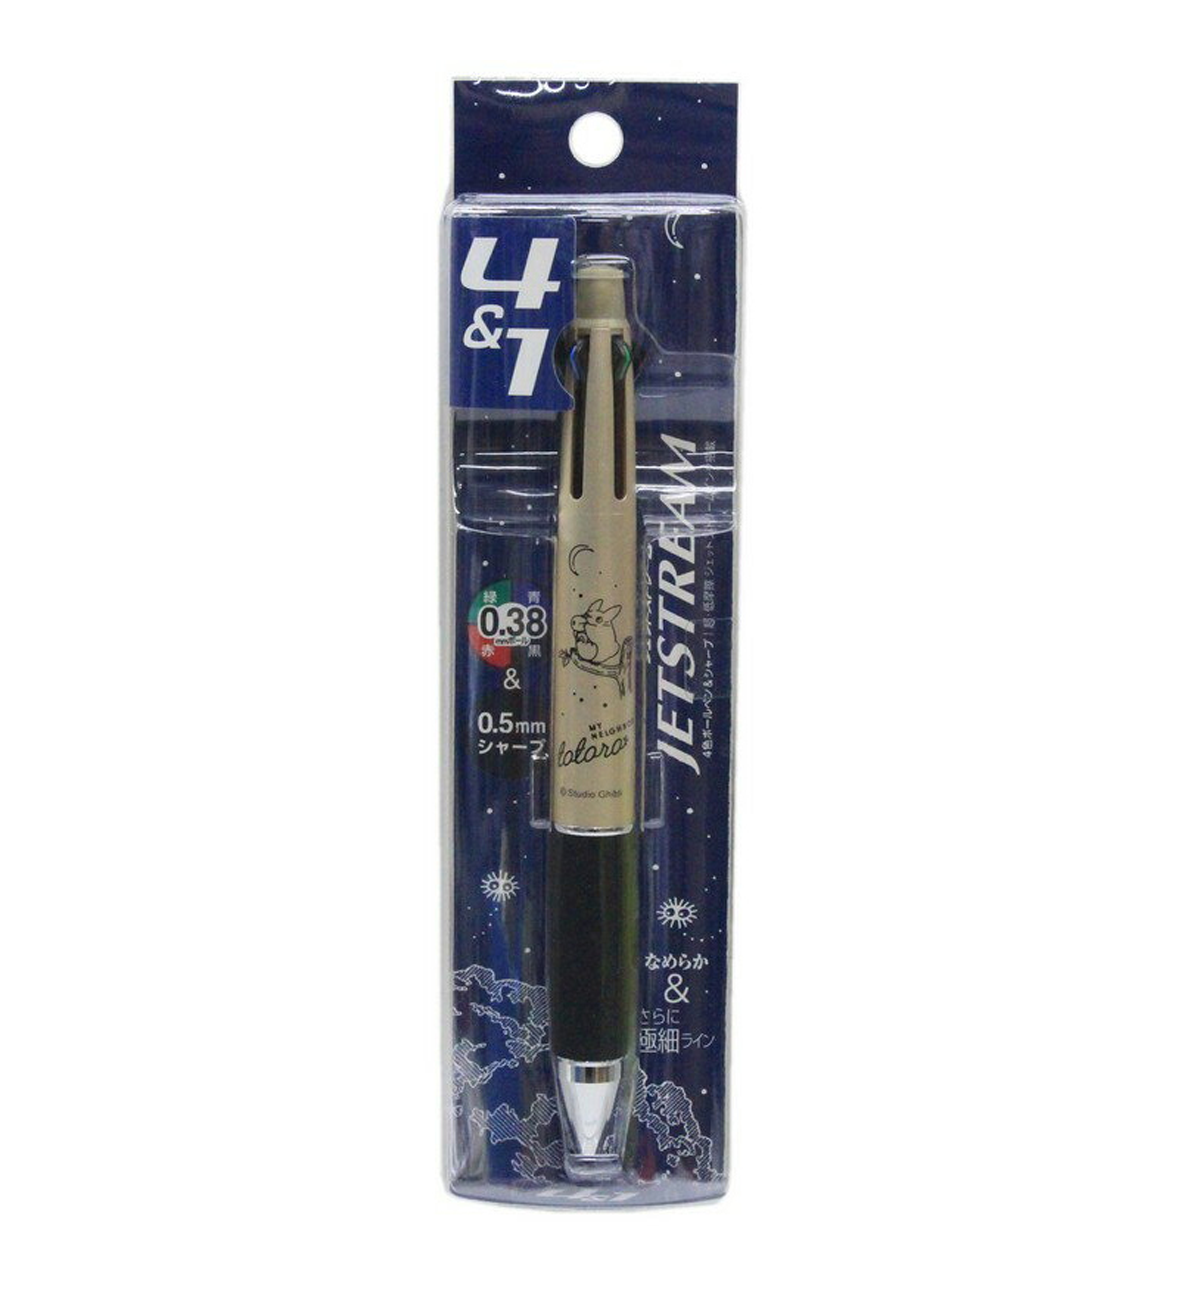 Spirited Away Jetstream 0.38 Pen + Pencil [My Neighbor Totoro]